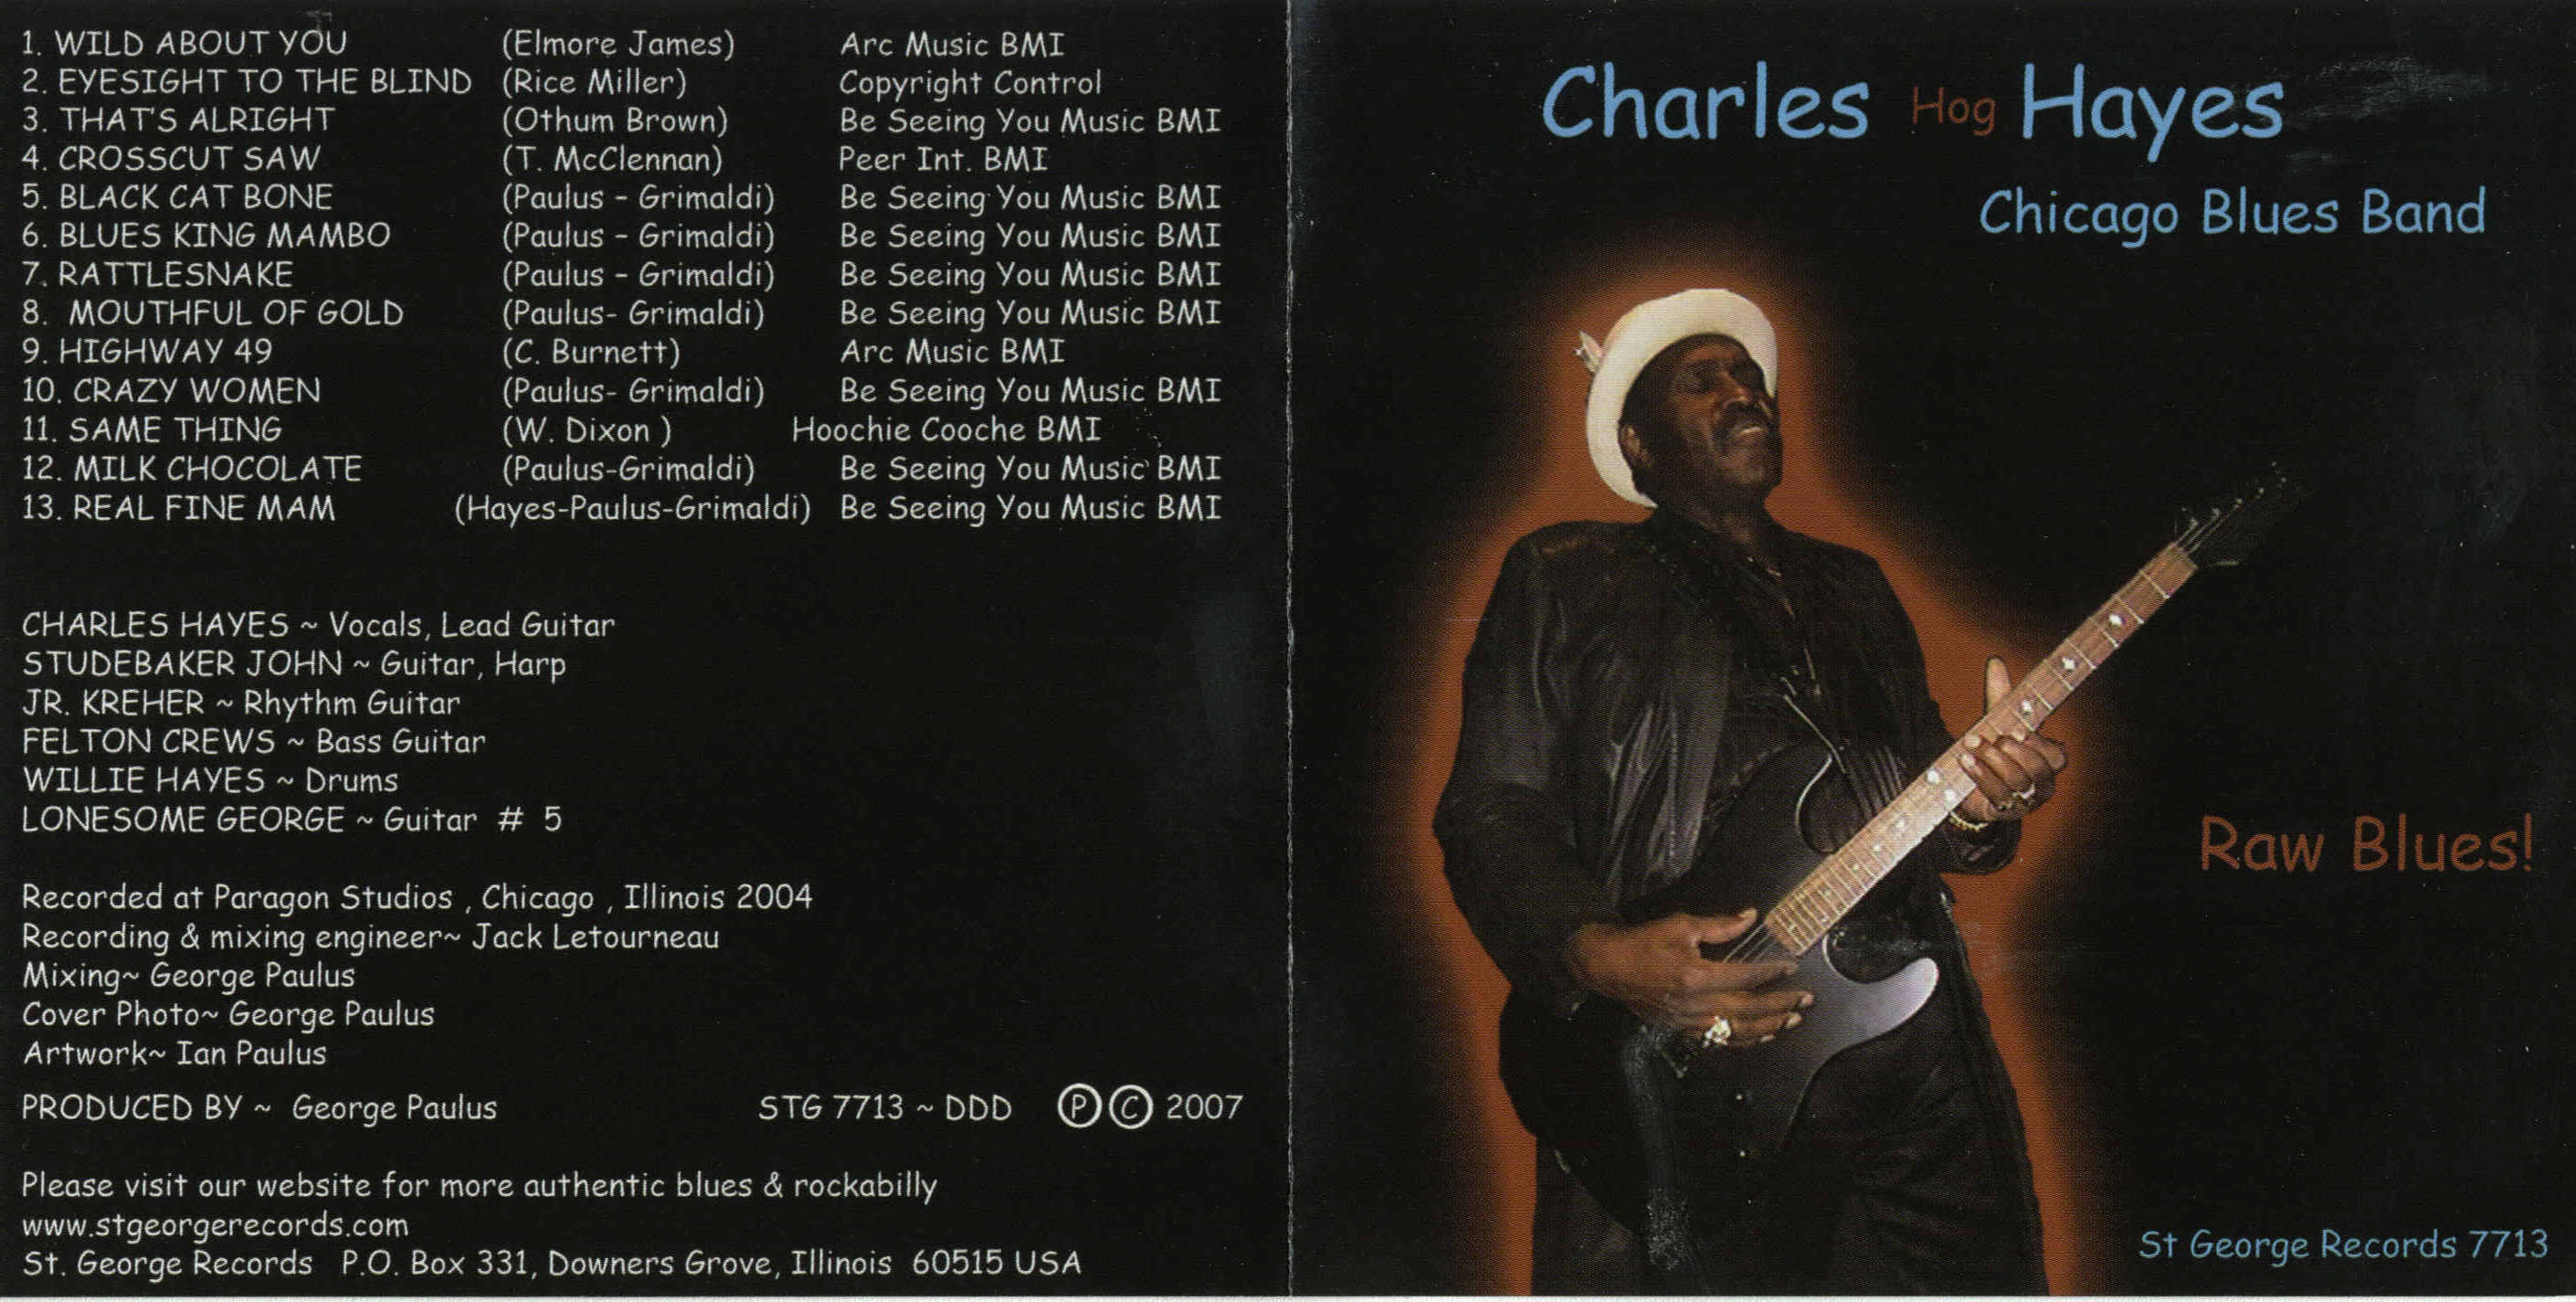 Charles 'Hog' Hayes Chicago Blues Band - Raw Blues